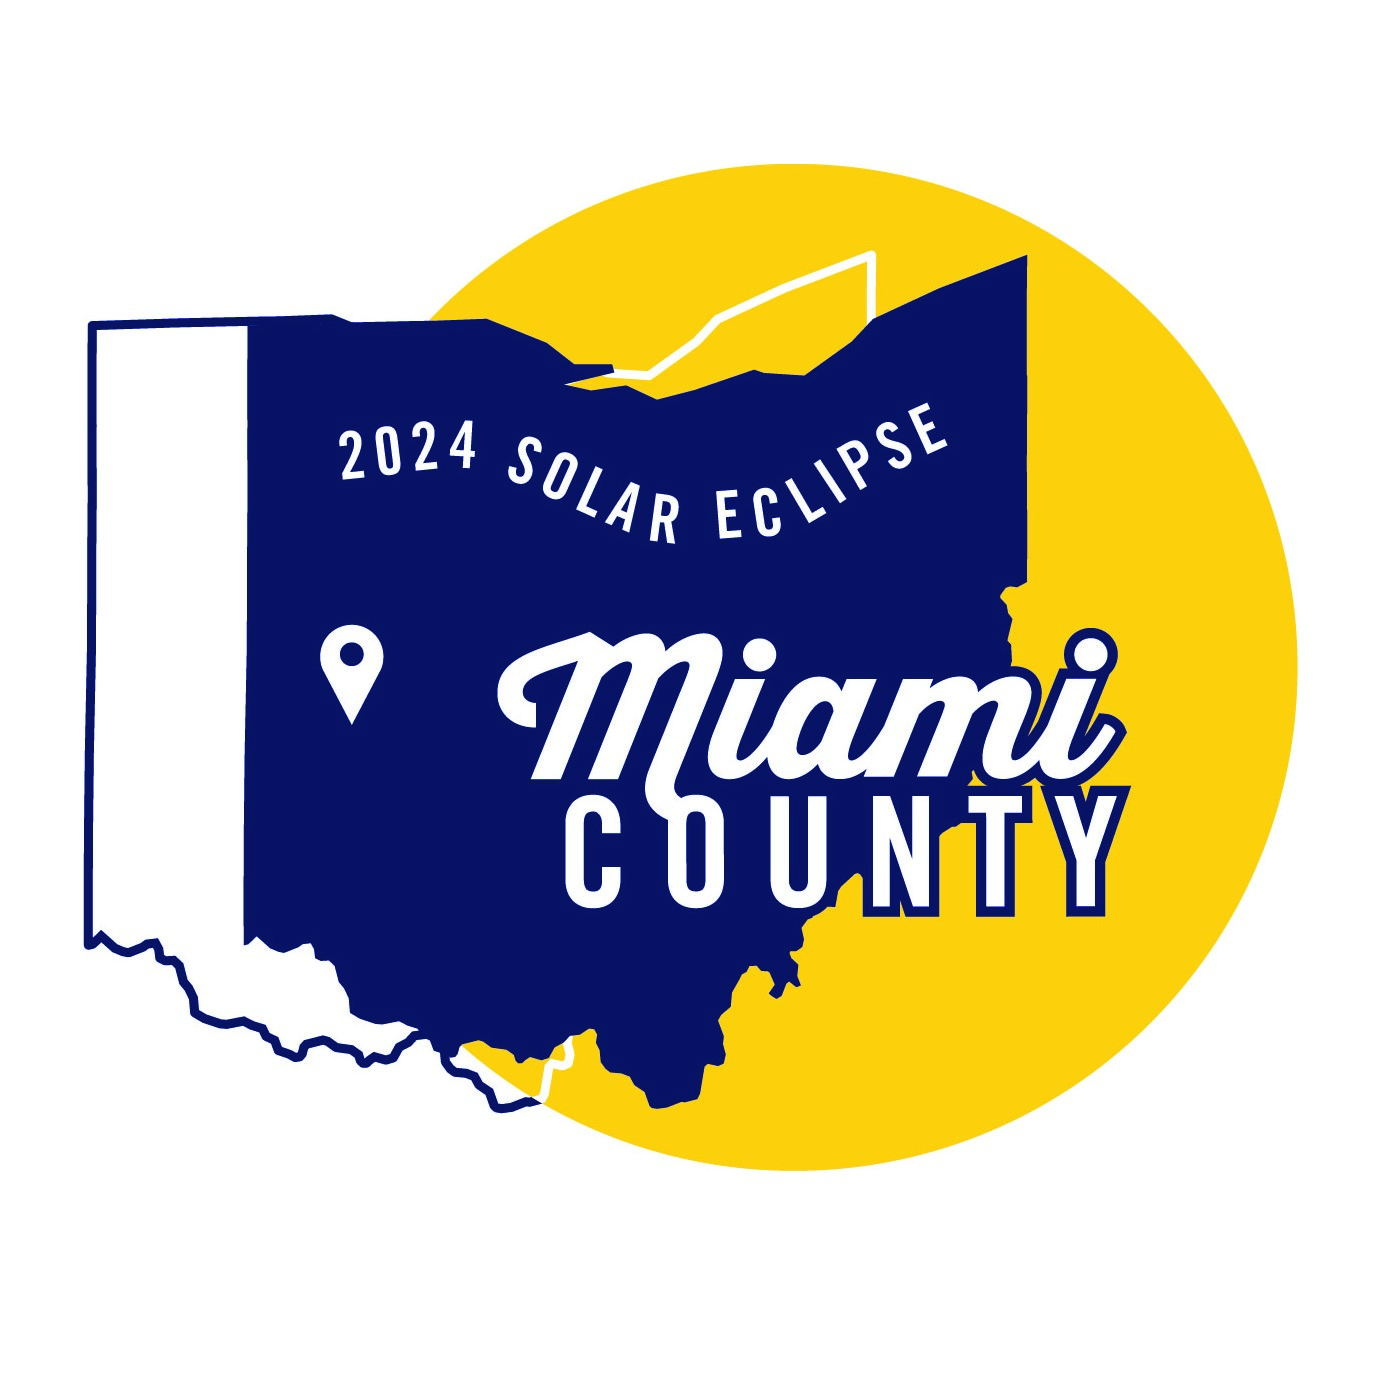 The 2024 Solar Eclipse in Miami County, Ohio Travel Taste and Tour